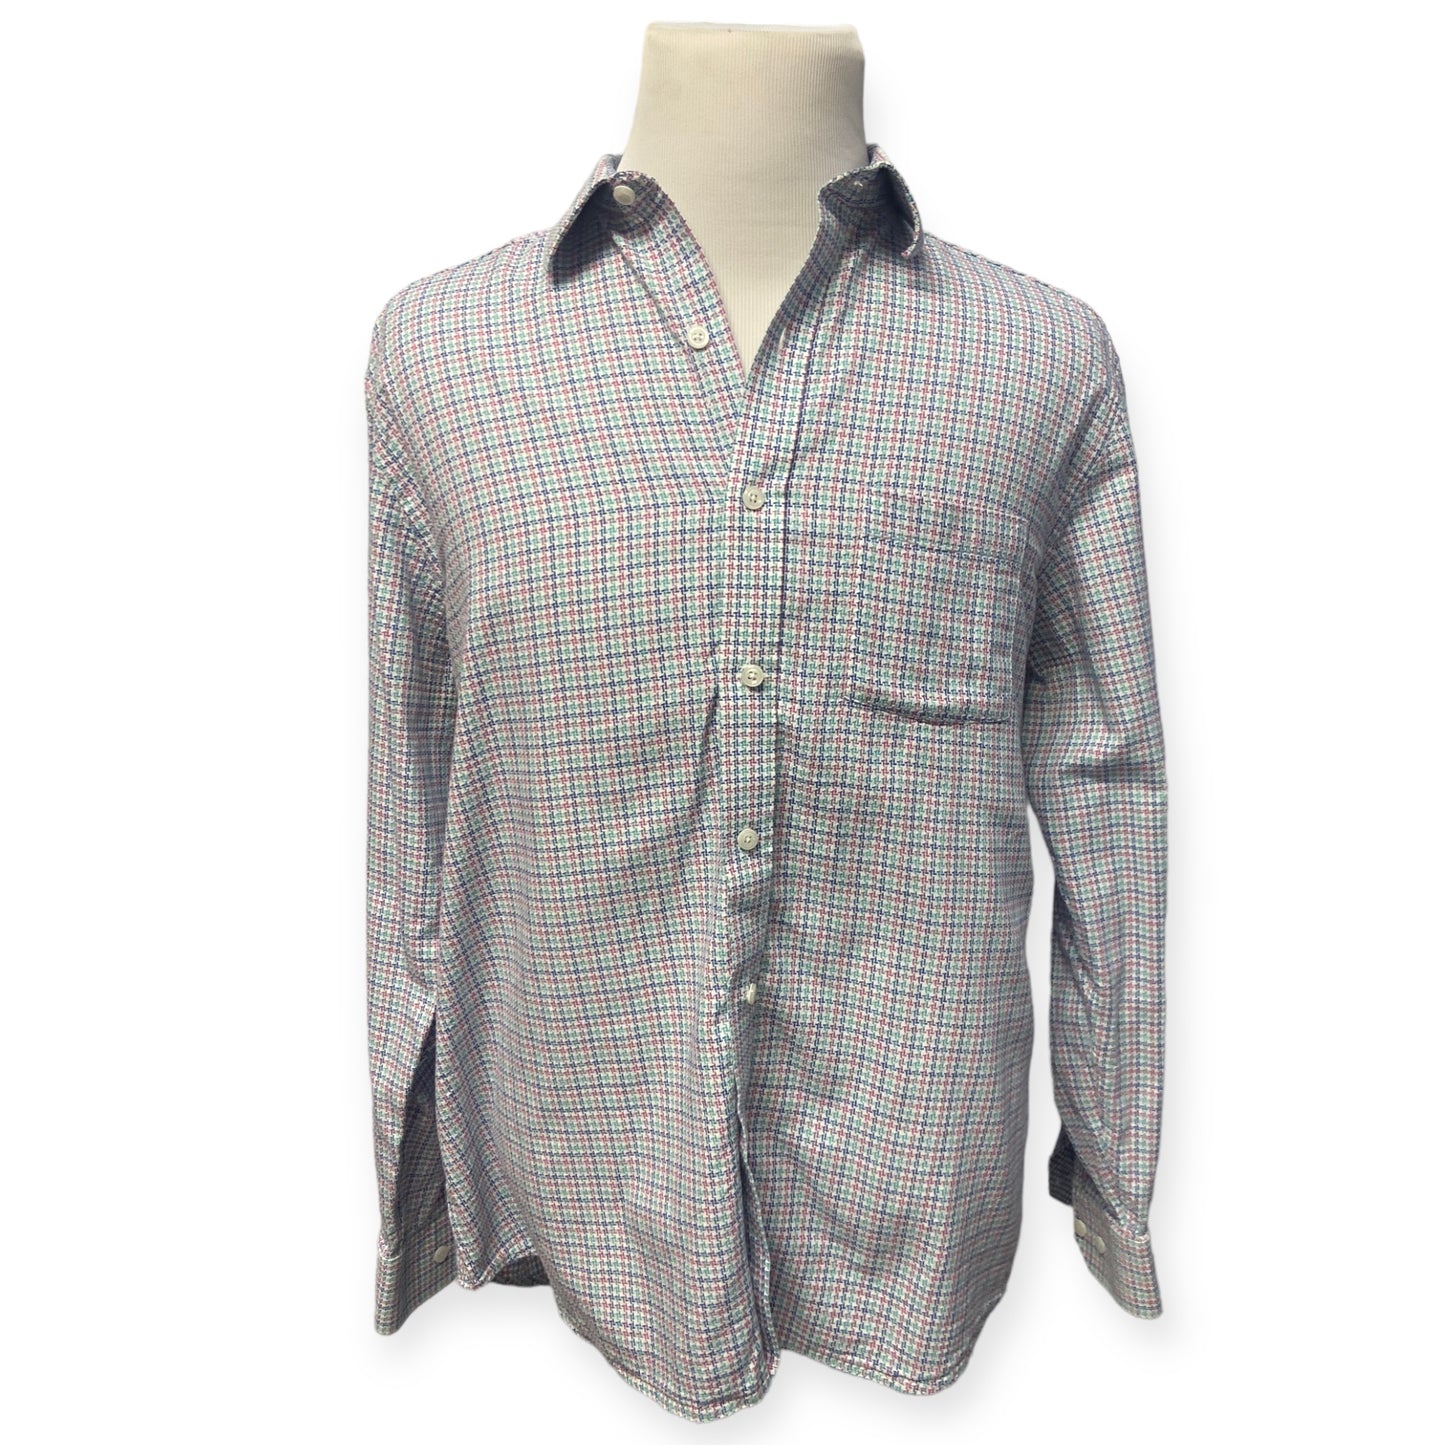 Johnson & Murphy Causal Color Plaid Button Down Men's Shirt (size XL)